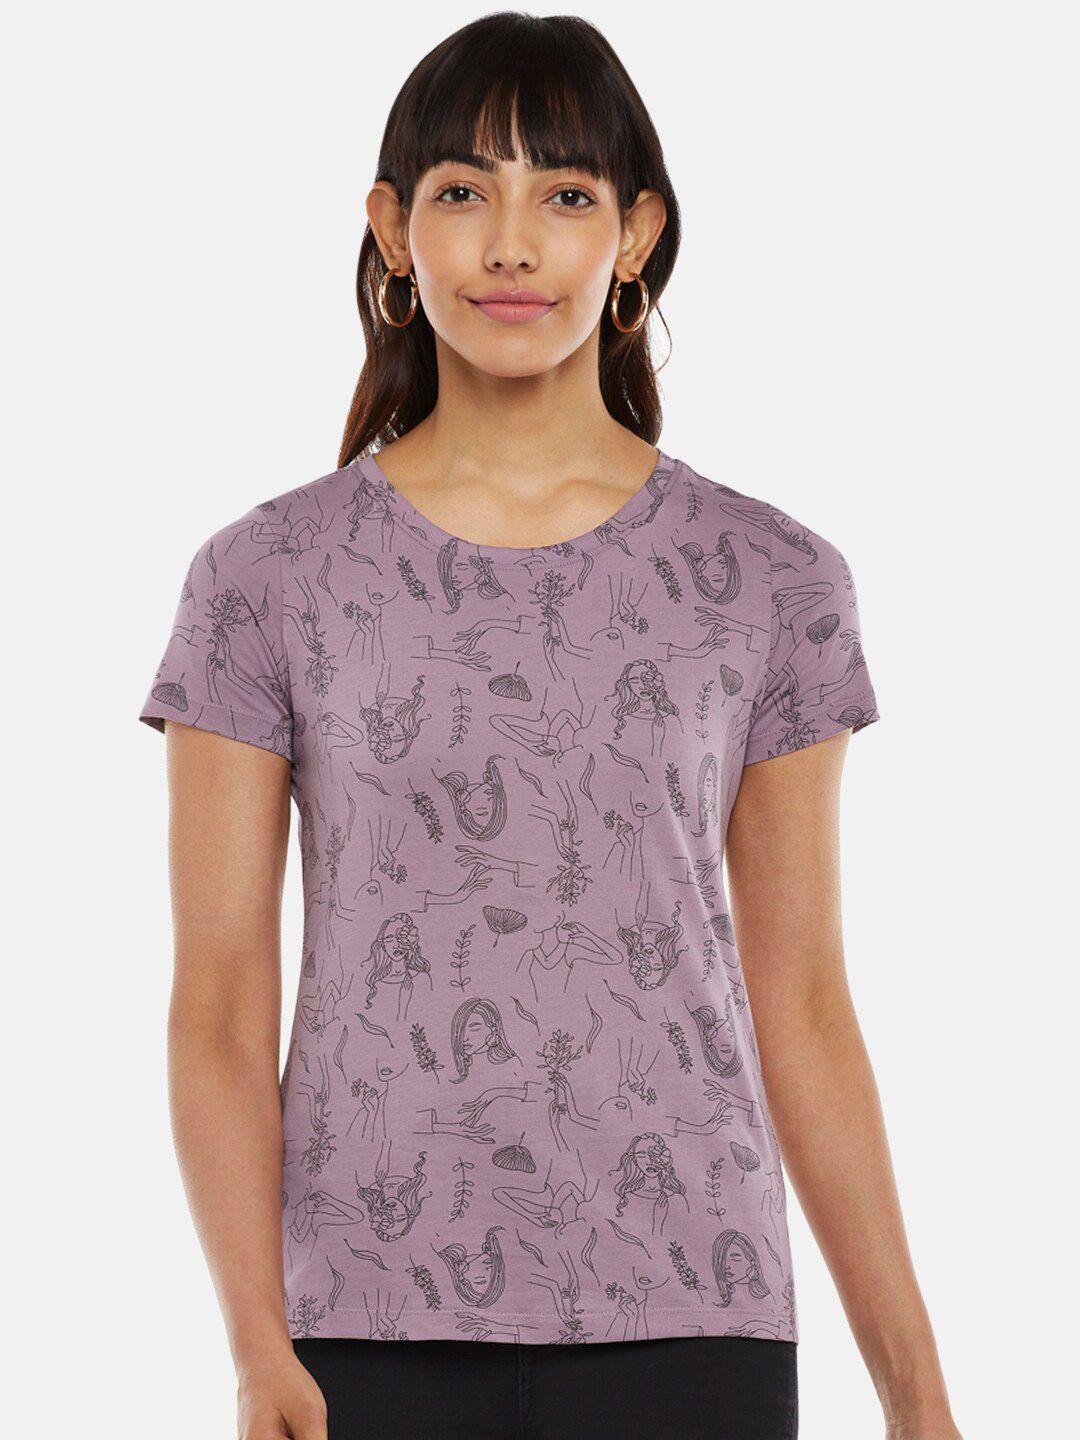 honey-by-pantaloons-women-lavender-printed-t-shirt